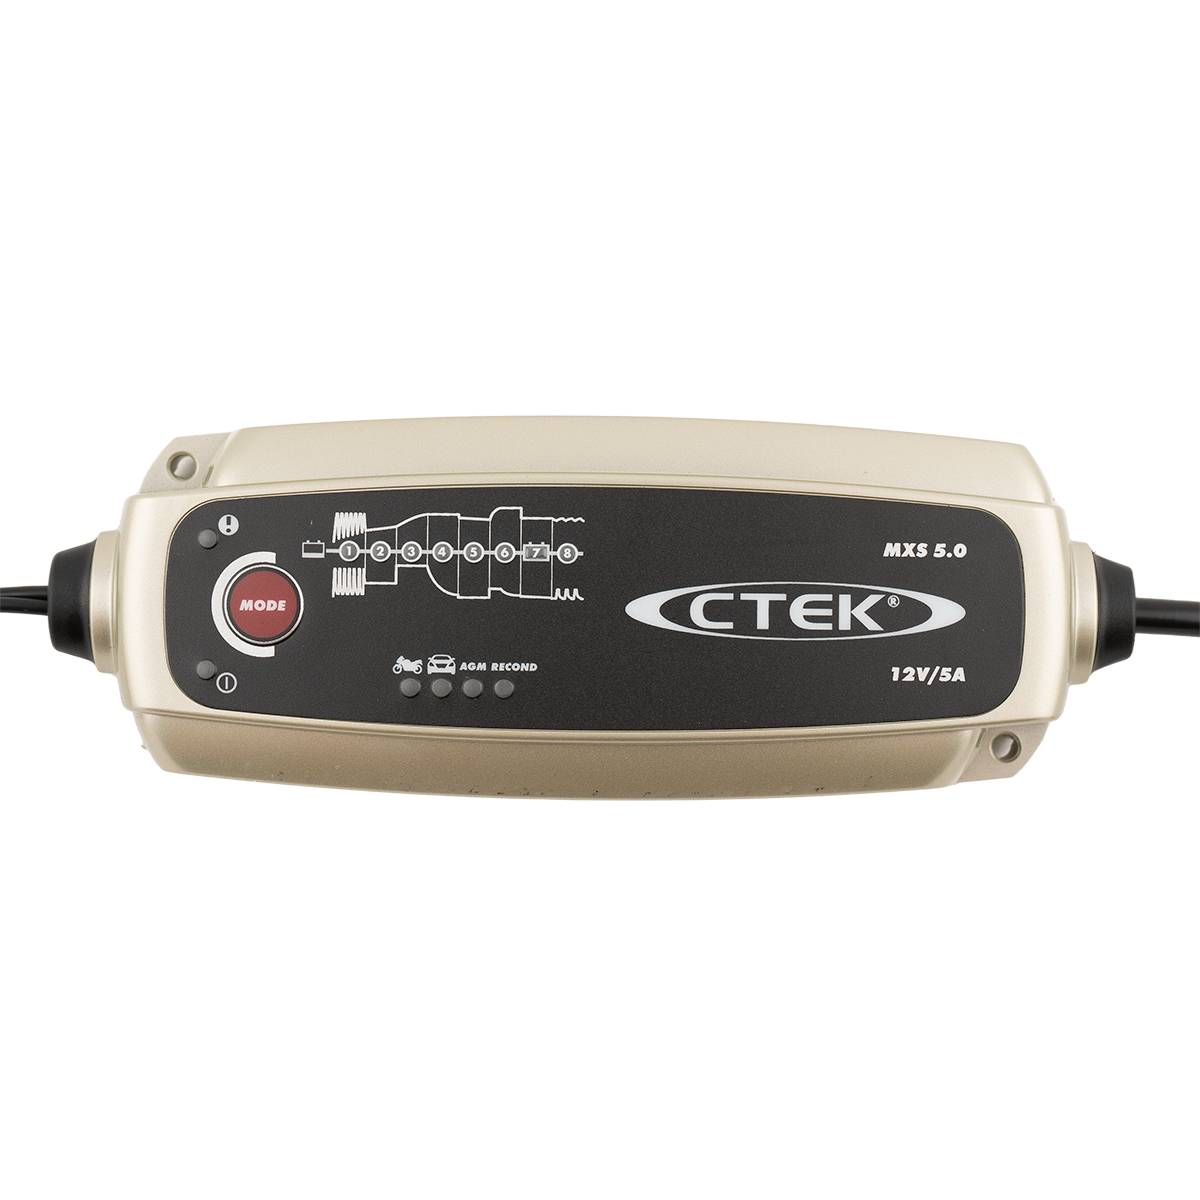 CTEK MXS 5.0 Autobatterie-Ladegerät 12V 5A